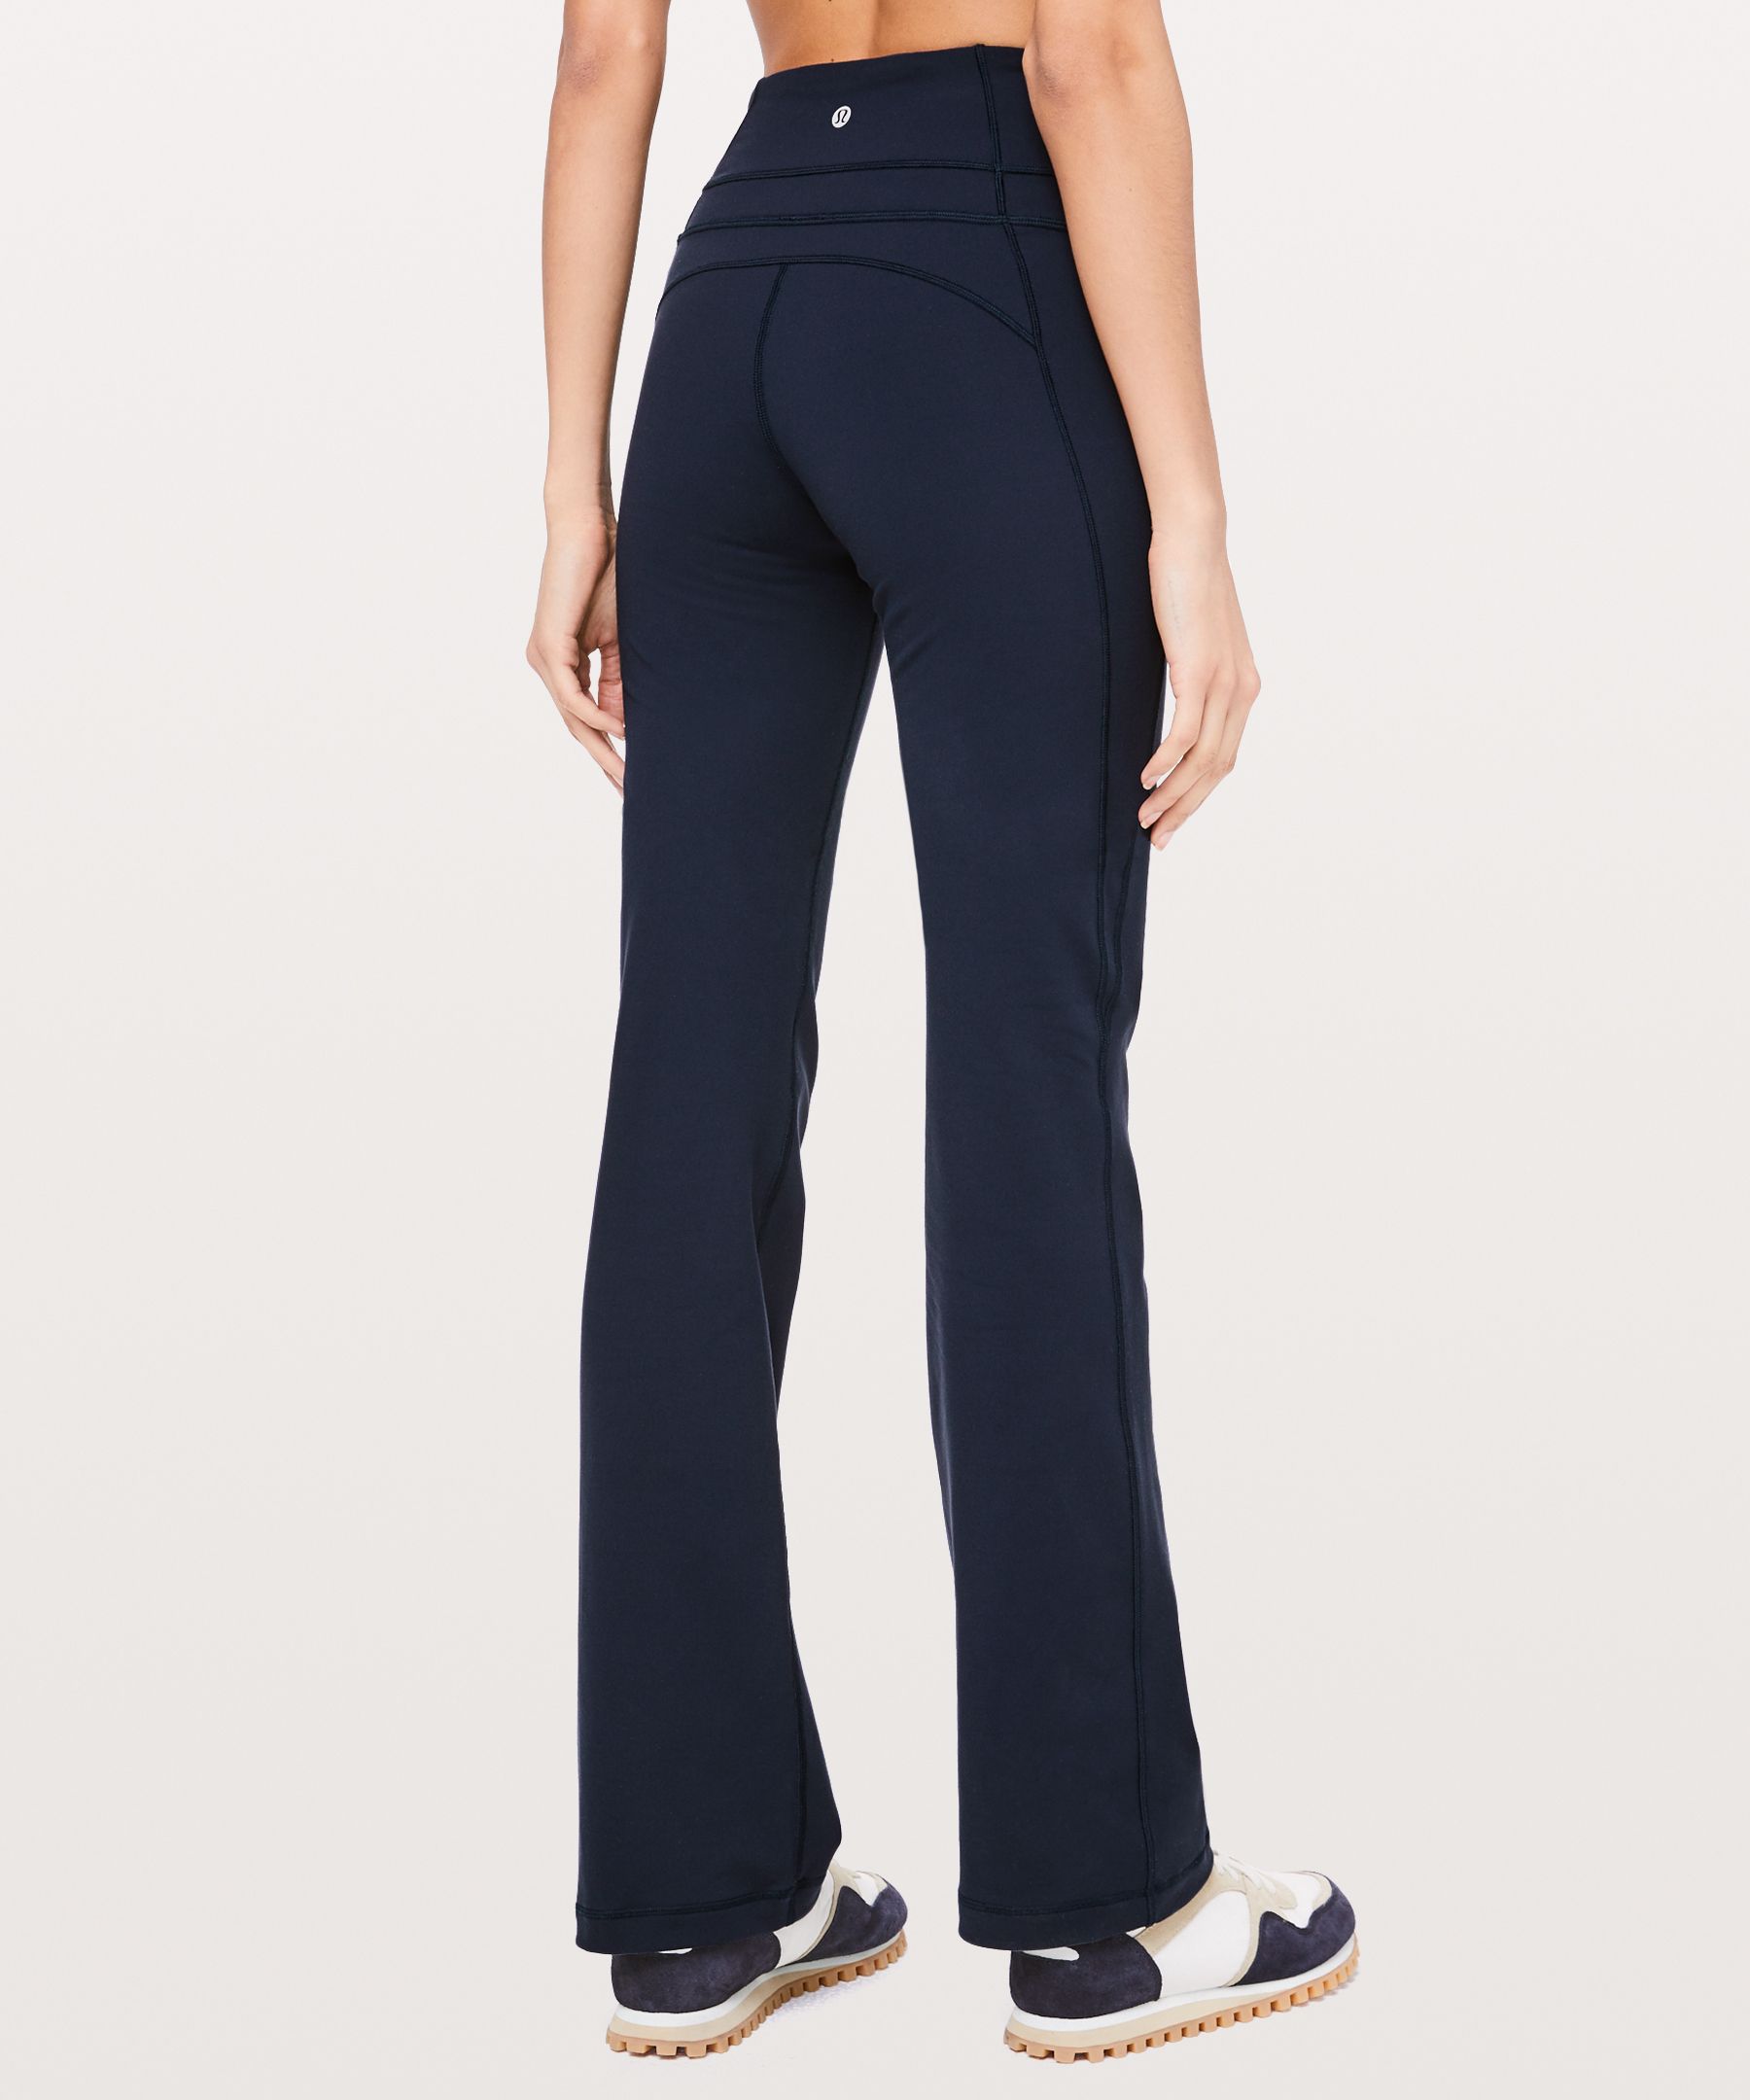 Safort 30//32//34 Inseam Tall Regular Women Casual Sweatpants 3 Pockets 100/% Cotton Jogger Pants